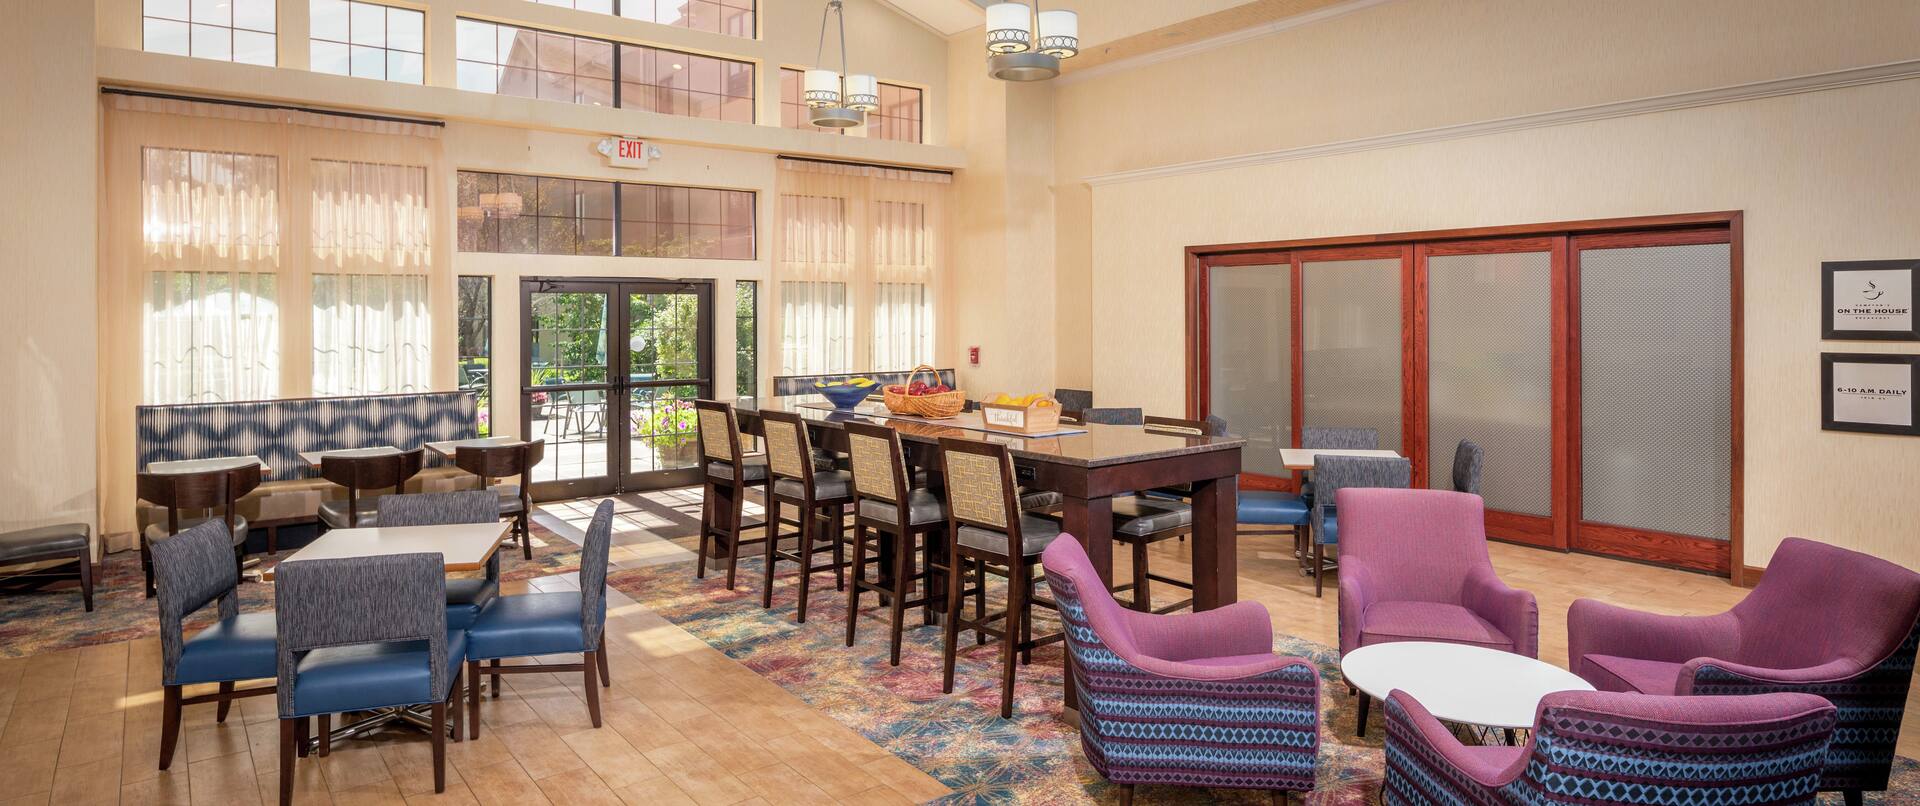 Lobby Dining Area for Breakfast Buffet